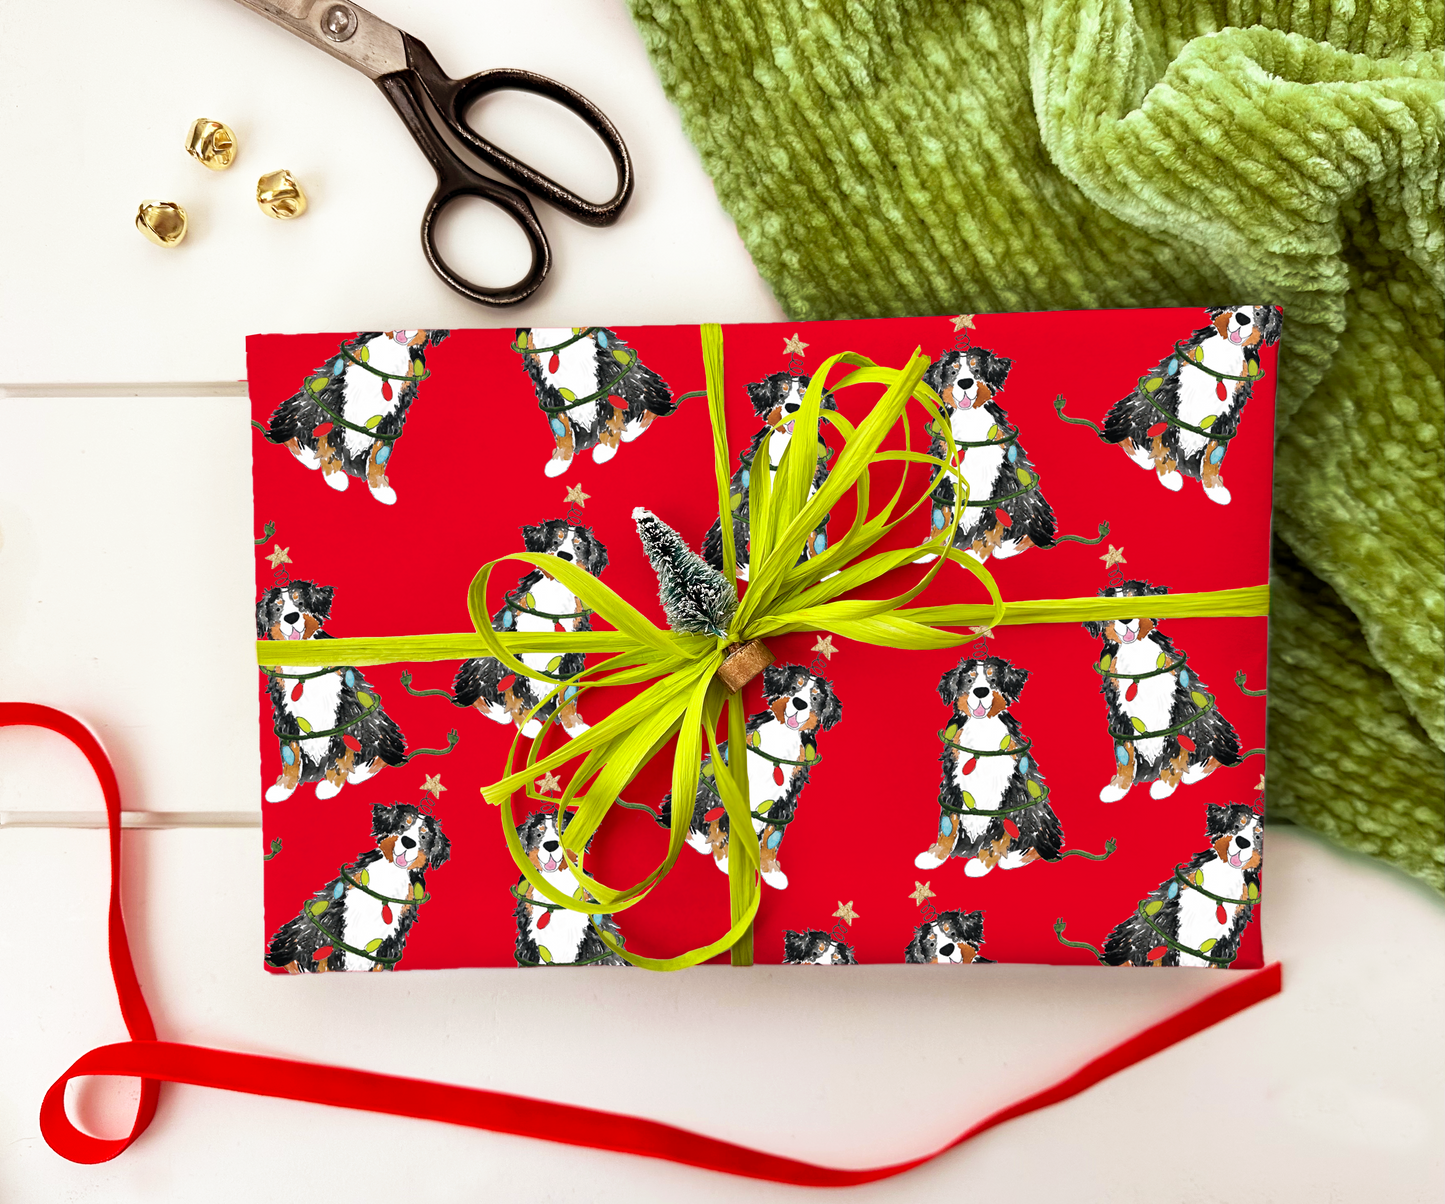 Festive Christmas Bernese Mountain Dog Gift Wrap - Red